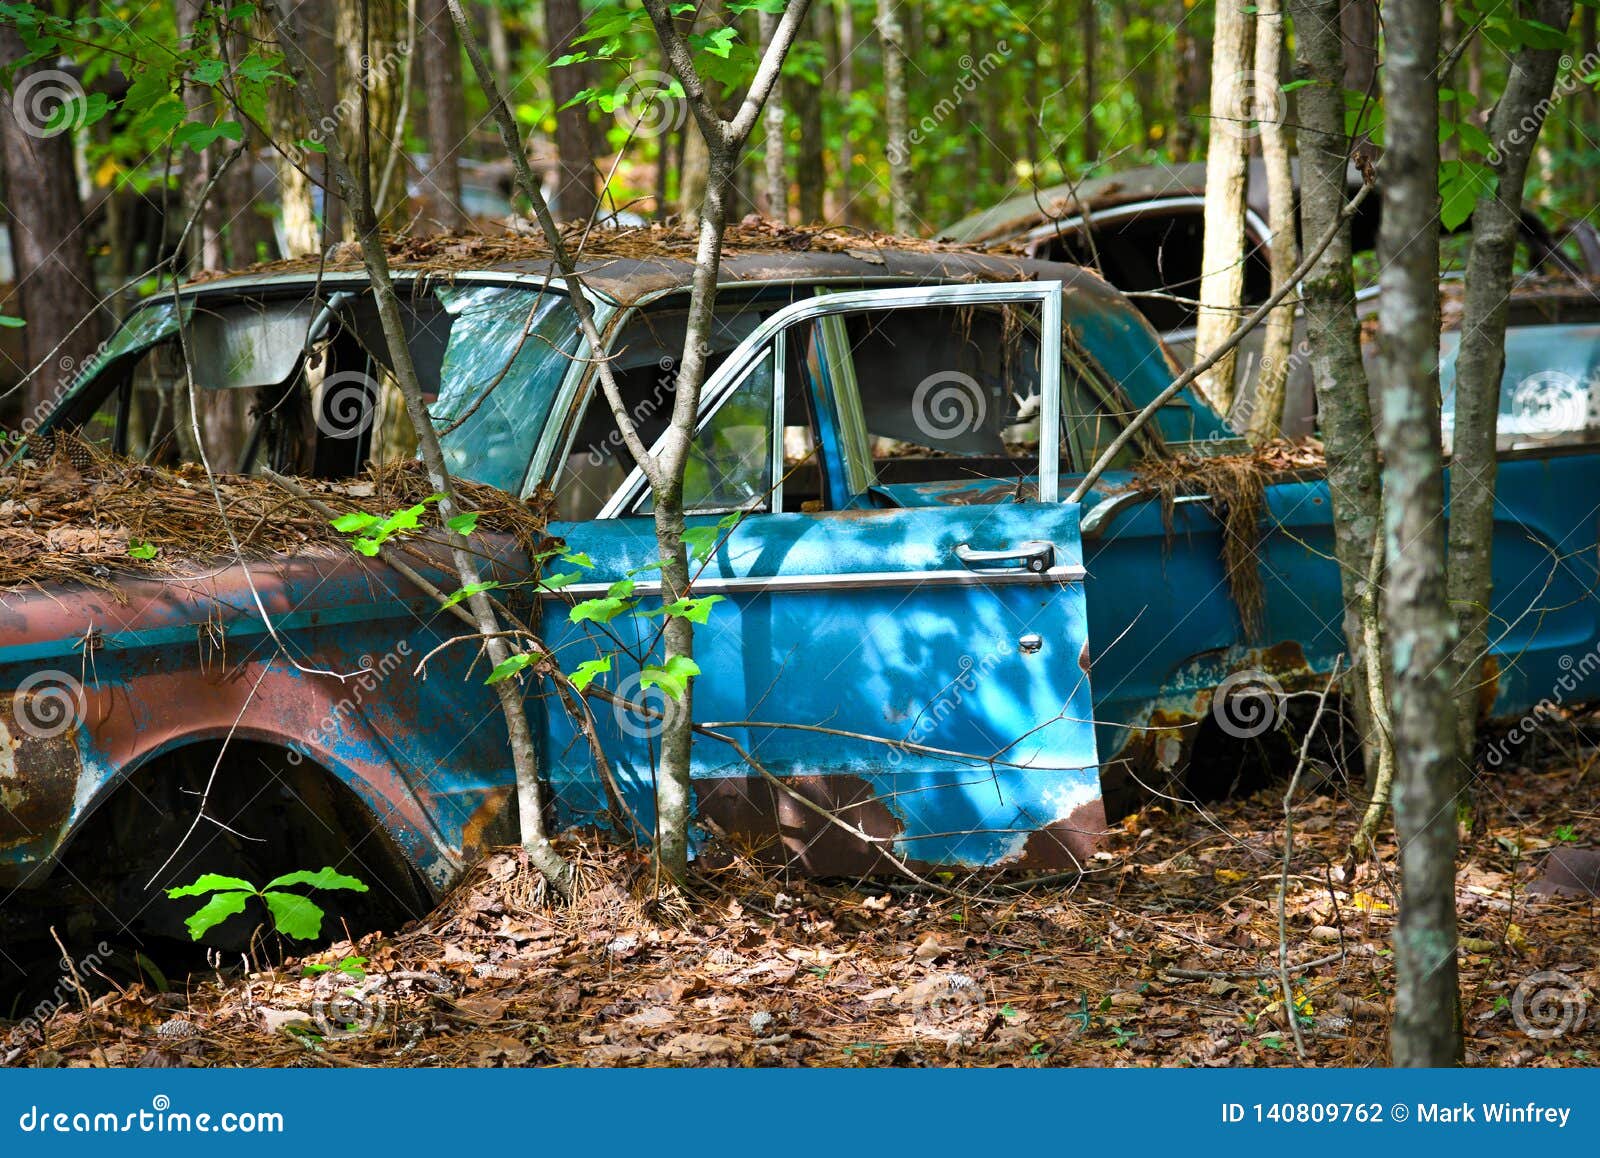 white-ga-usa-october-close-up-image-old-scrap-car-junk-yard-old-scrap-car-140809762